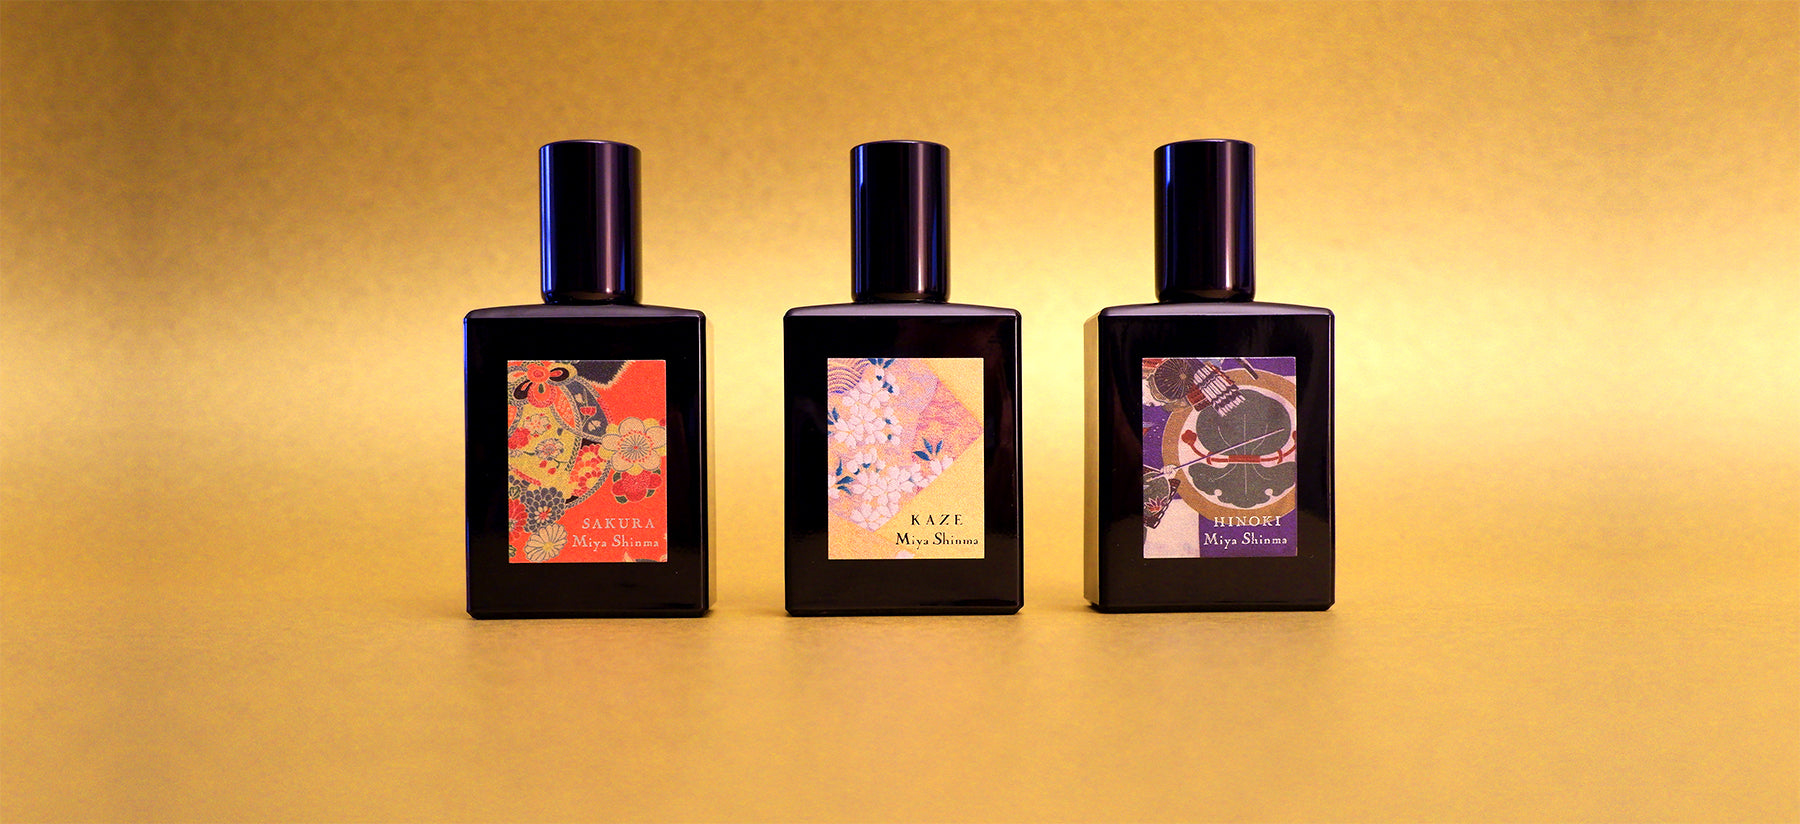 Miya Shinma Parfumeur Paris – 贅を尽くした日本の高級フレグランス